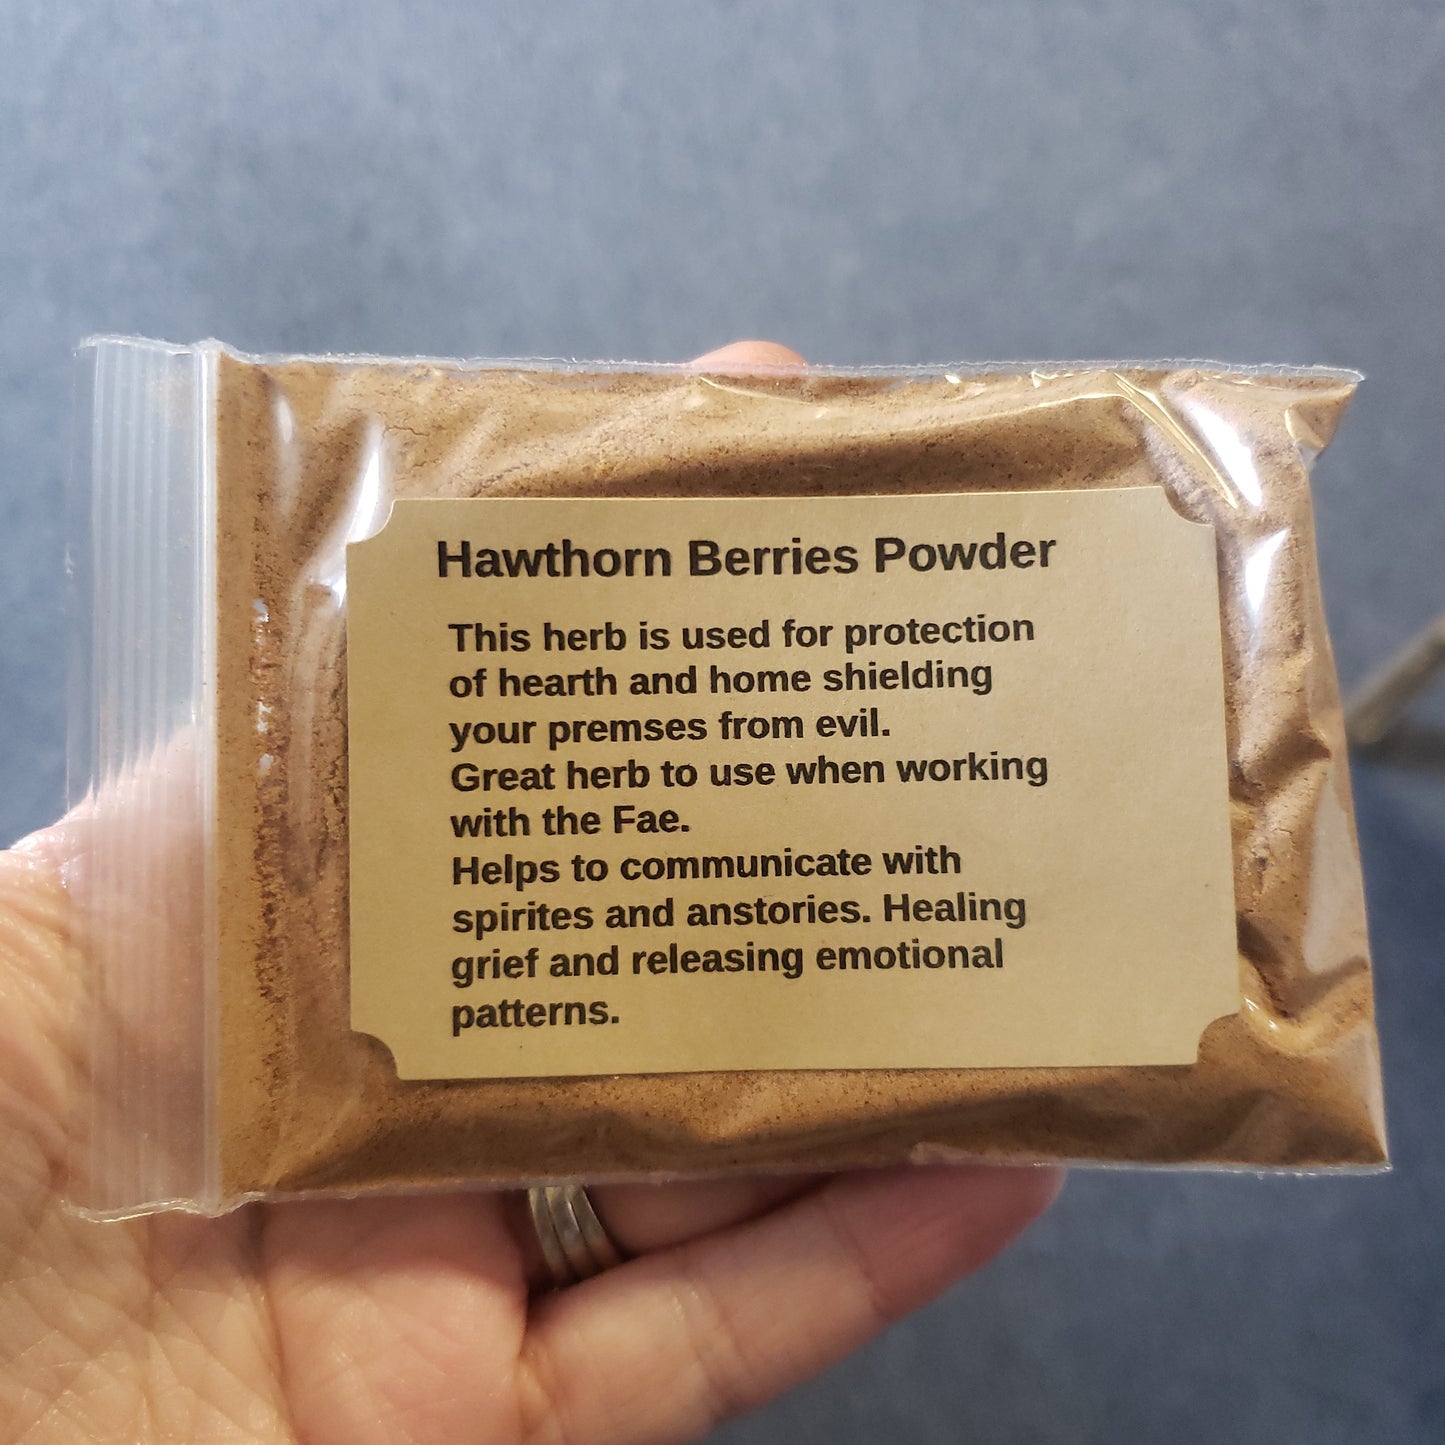 Hawthorn berries powder